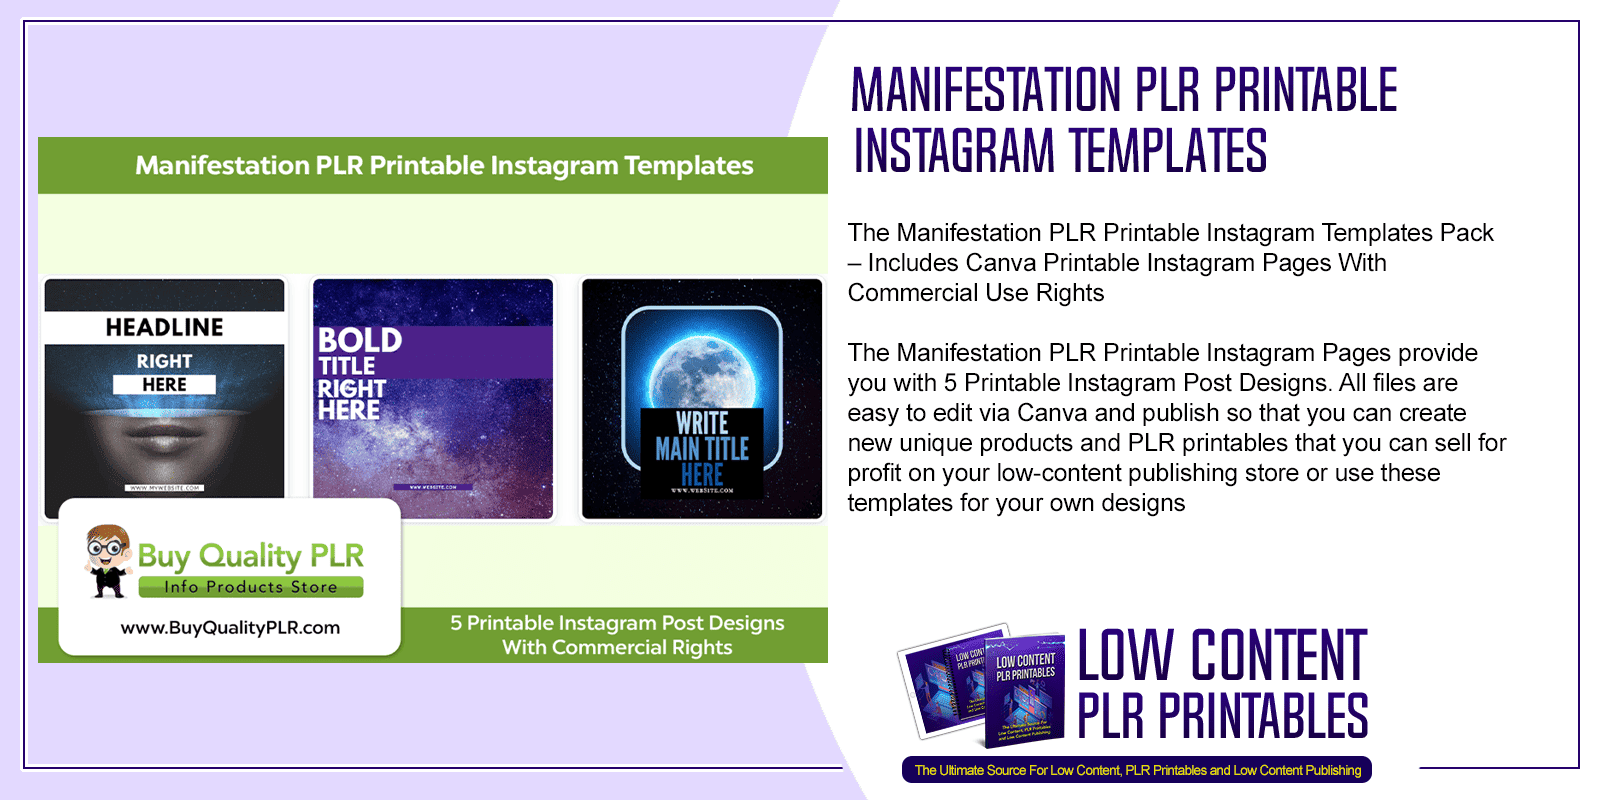 Manifestation PLR Printable Instagram Template